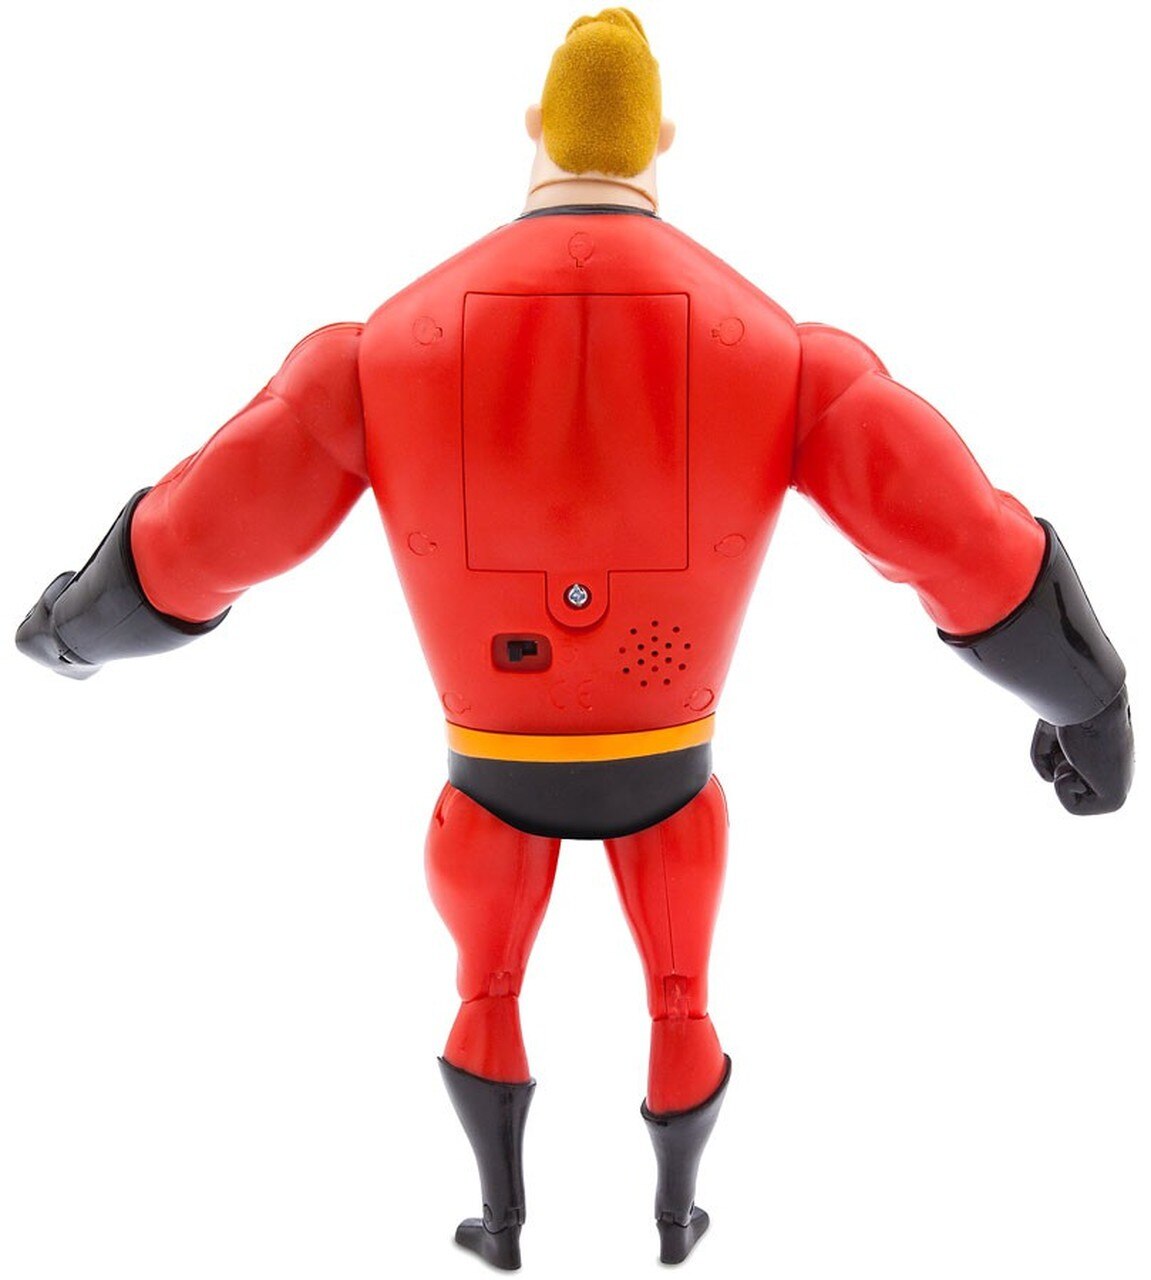 Disney : Pixar Incredibles 2 Mr. Incredible Exclusive Talking Action Figure 2